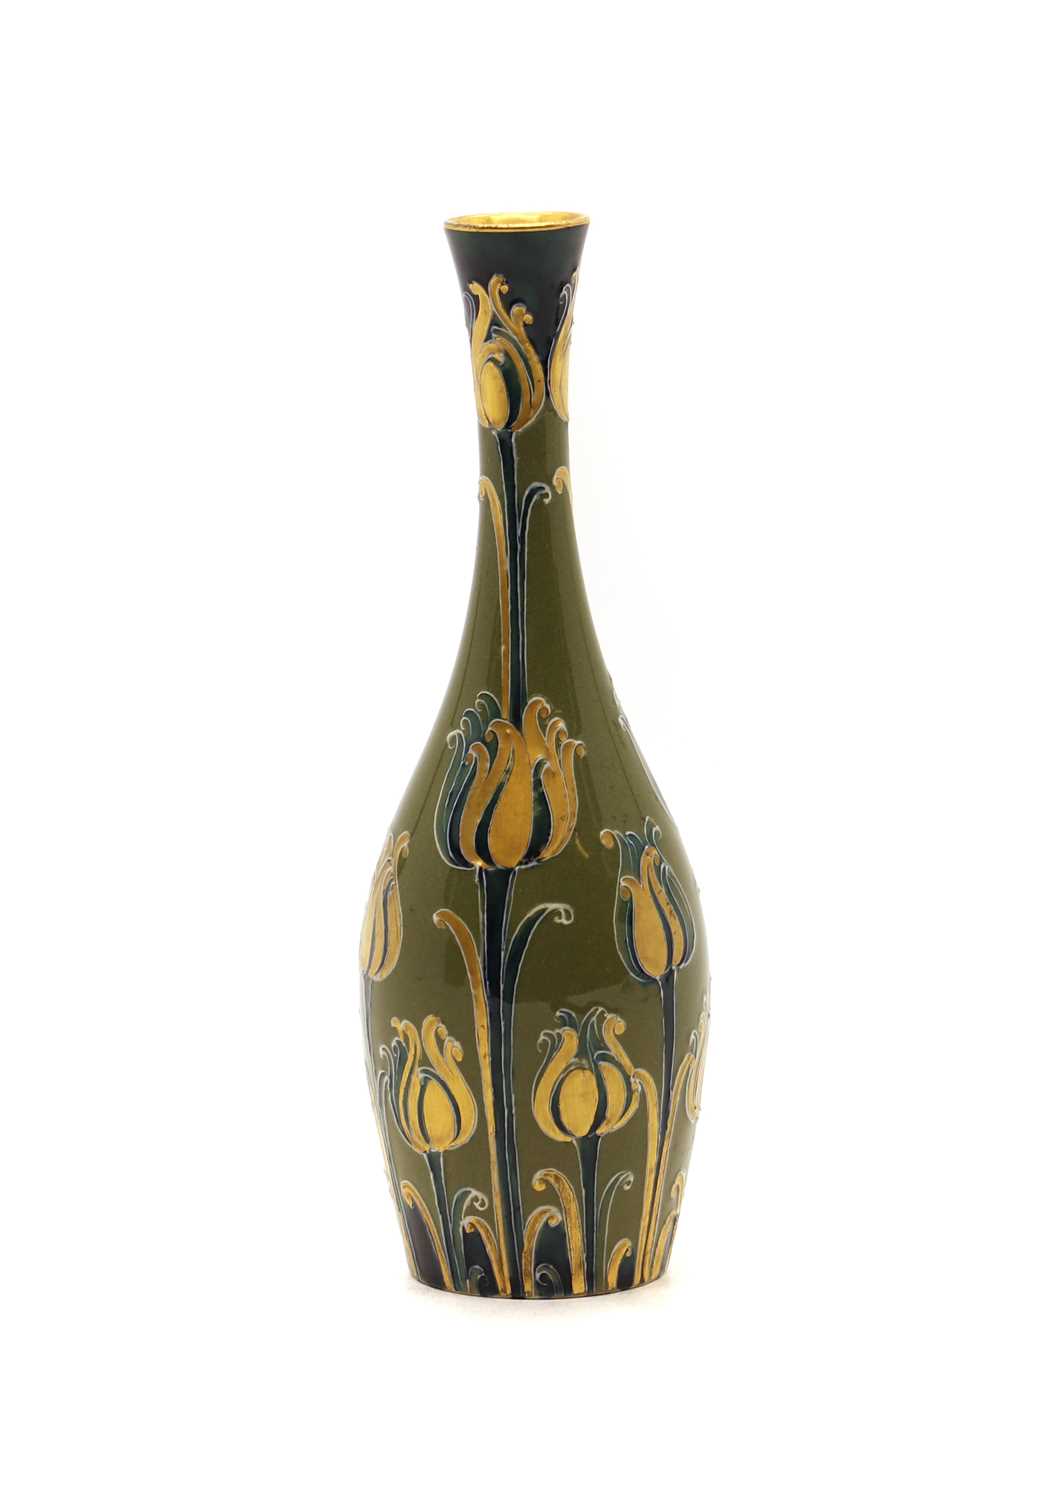 A Moorcroft McIntnyre Florian Ware vase